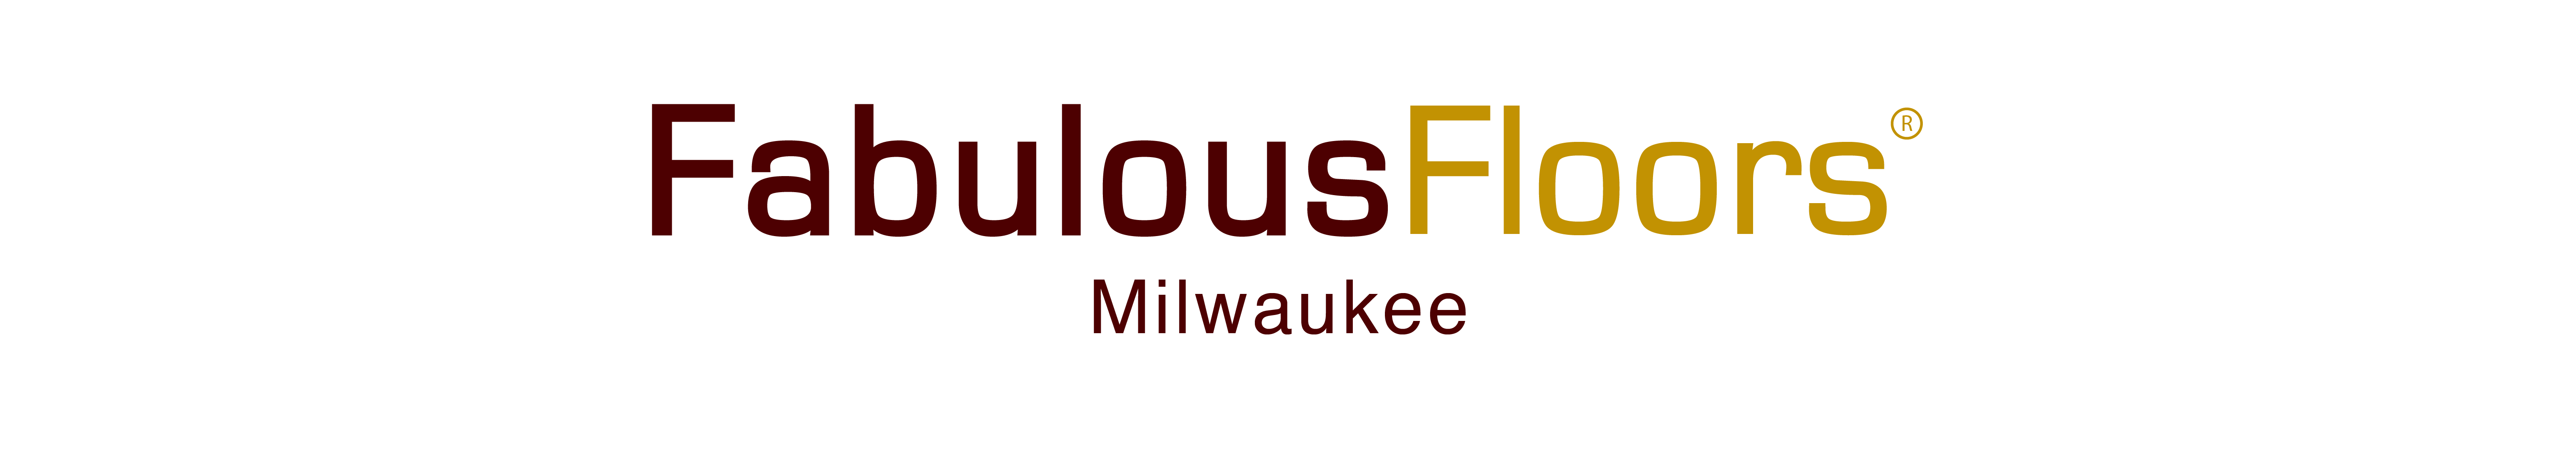 Fabulous Floors Milwaukee